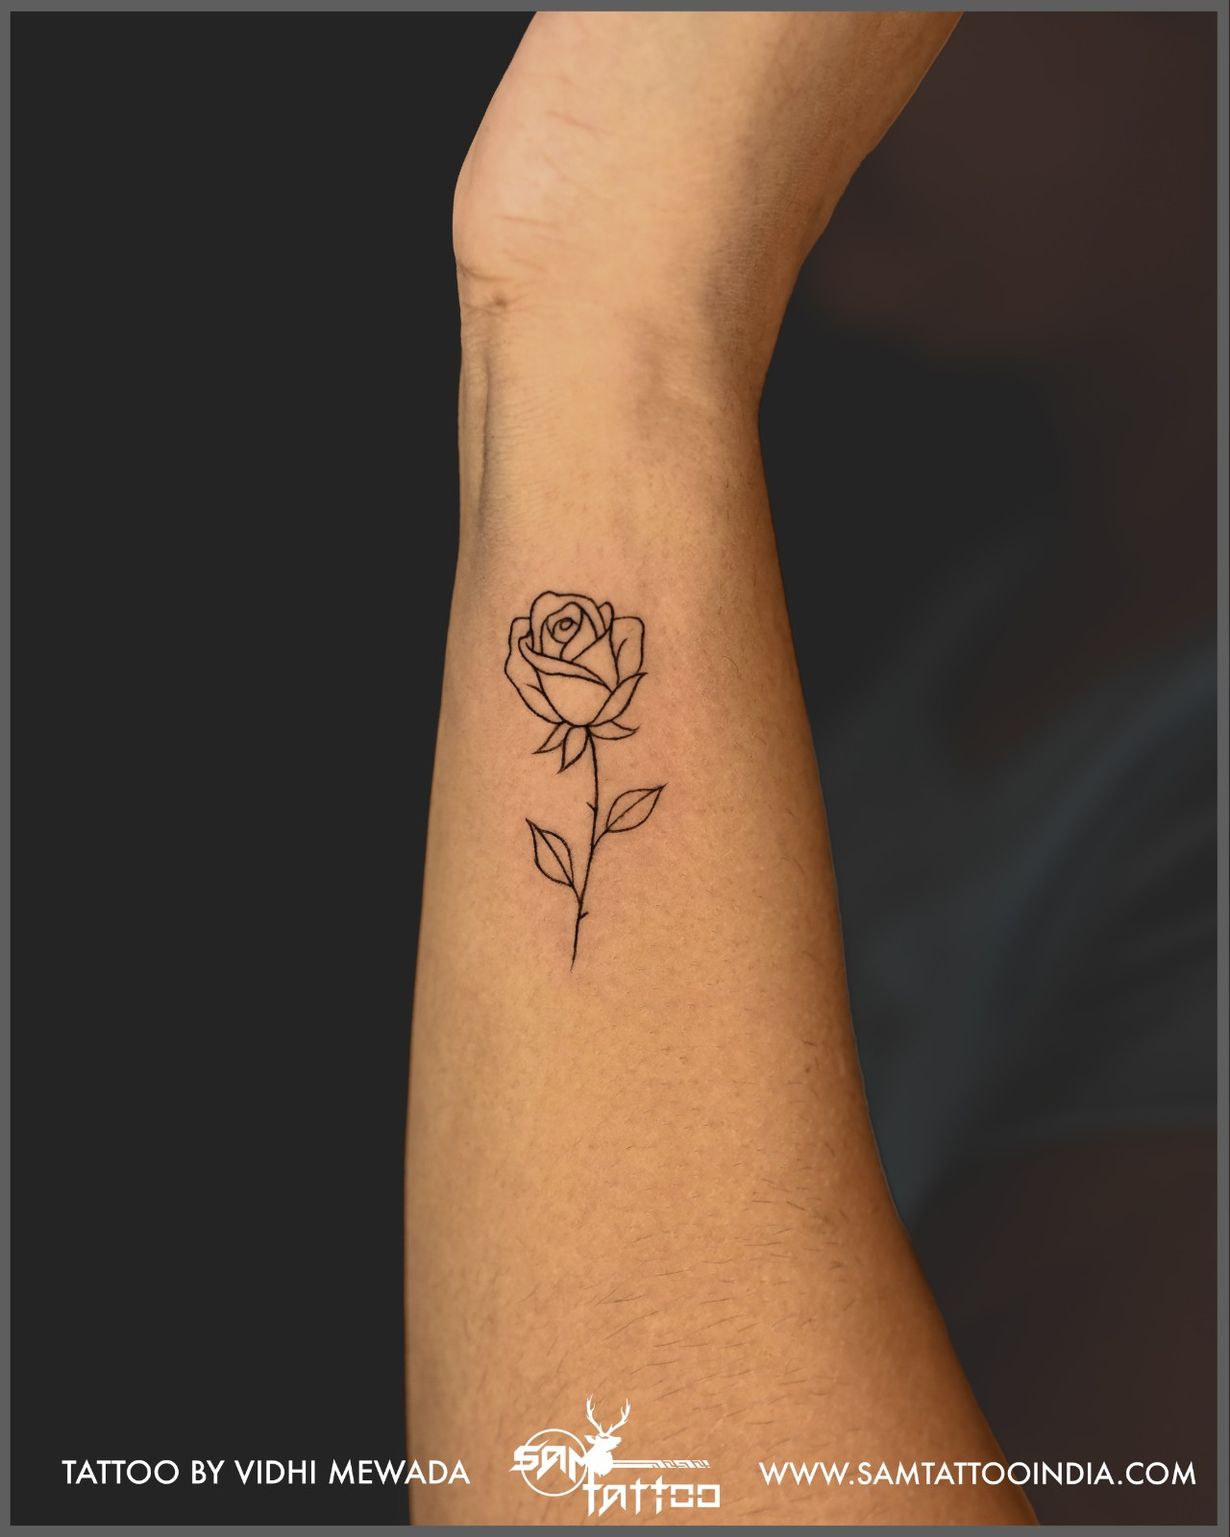 Minimal rose tattoo